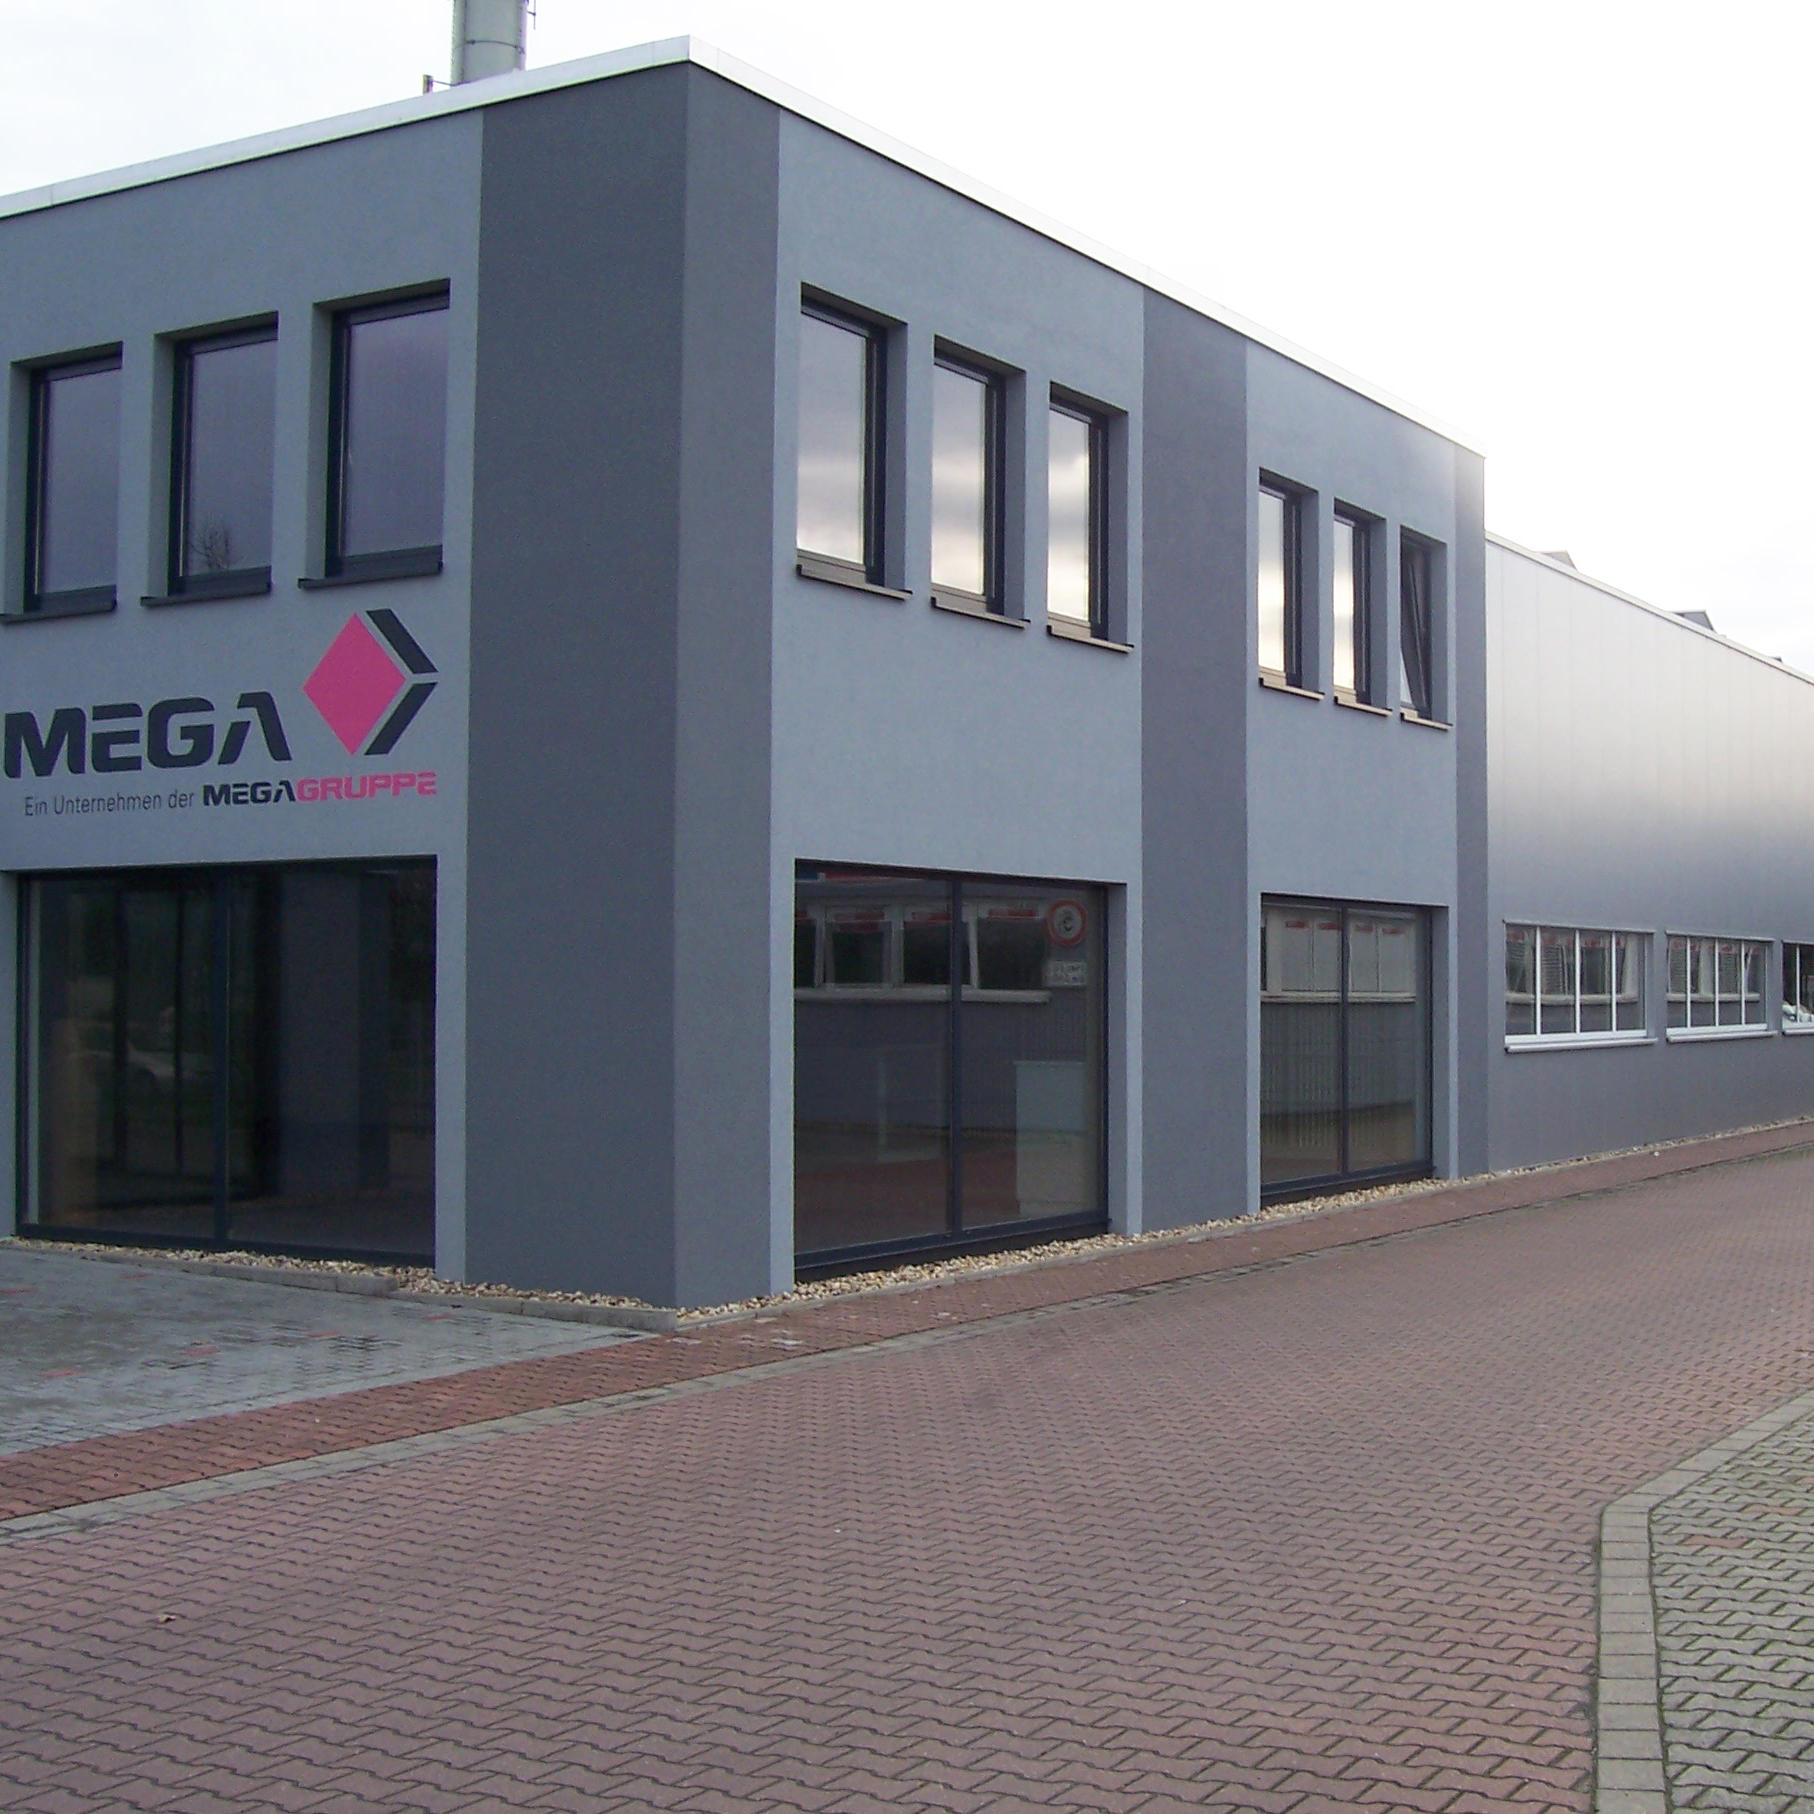 Standortbild Fassade MEGA eG Hamm, Großhandel für Maler, Bodenleger und Stuckateure